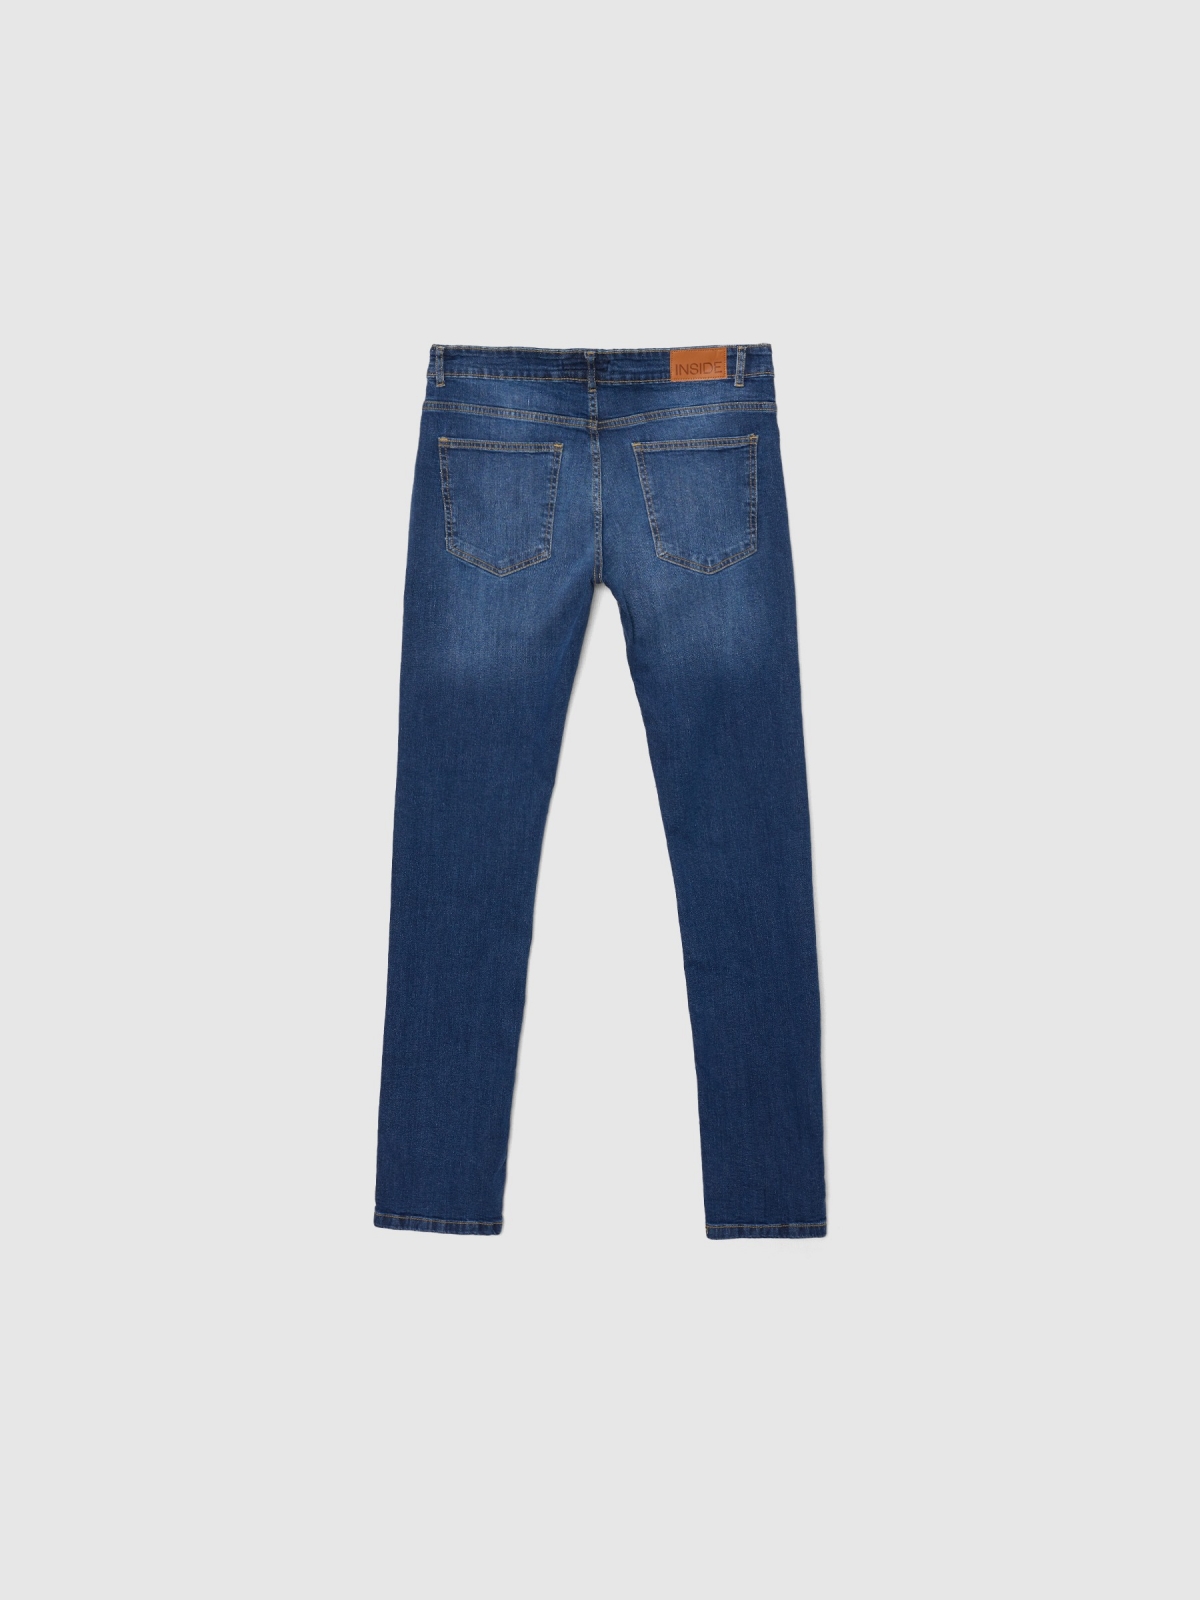 Regular basic jeans blue detail view